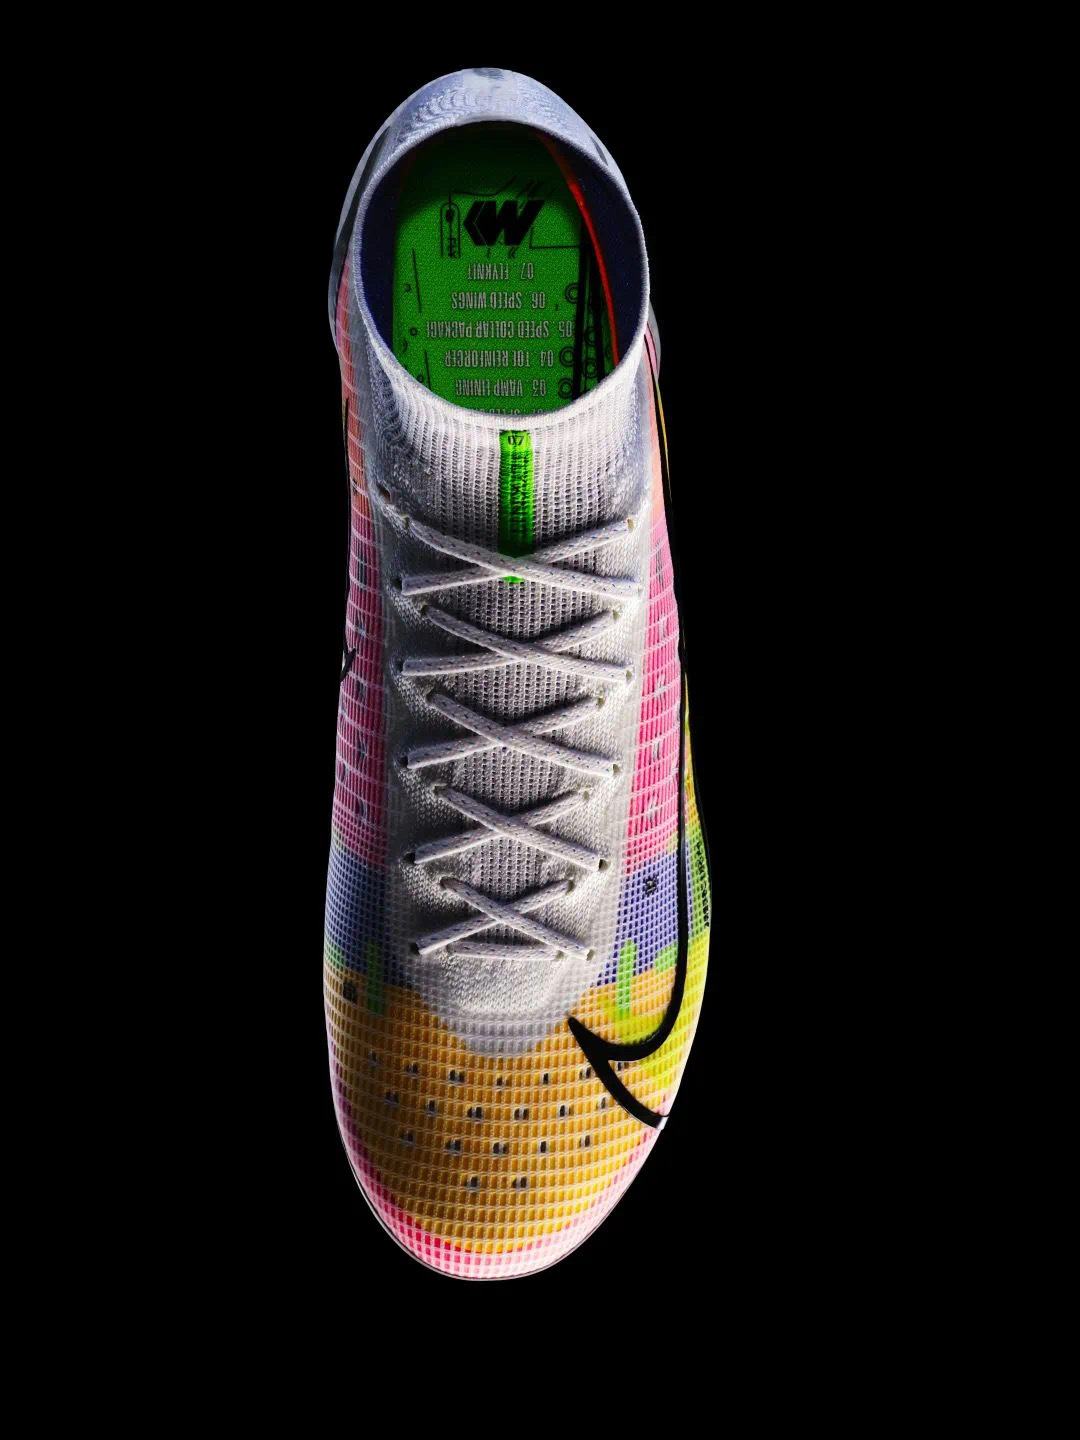 Tony Shoe Nike Mercurial football shoes